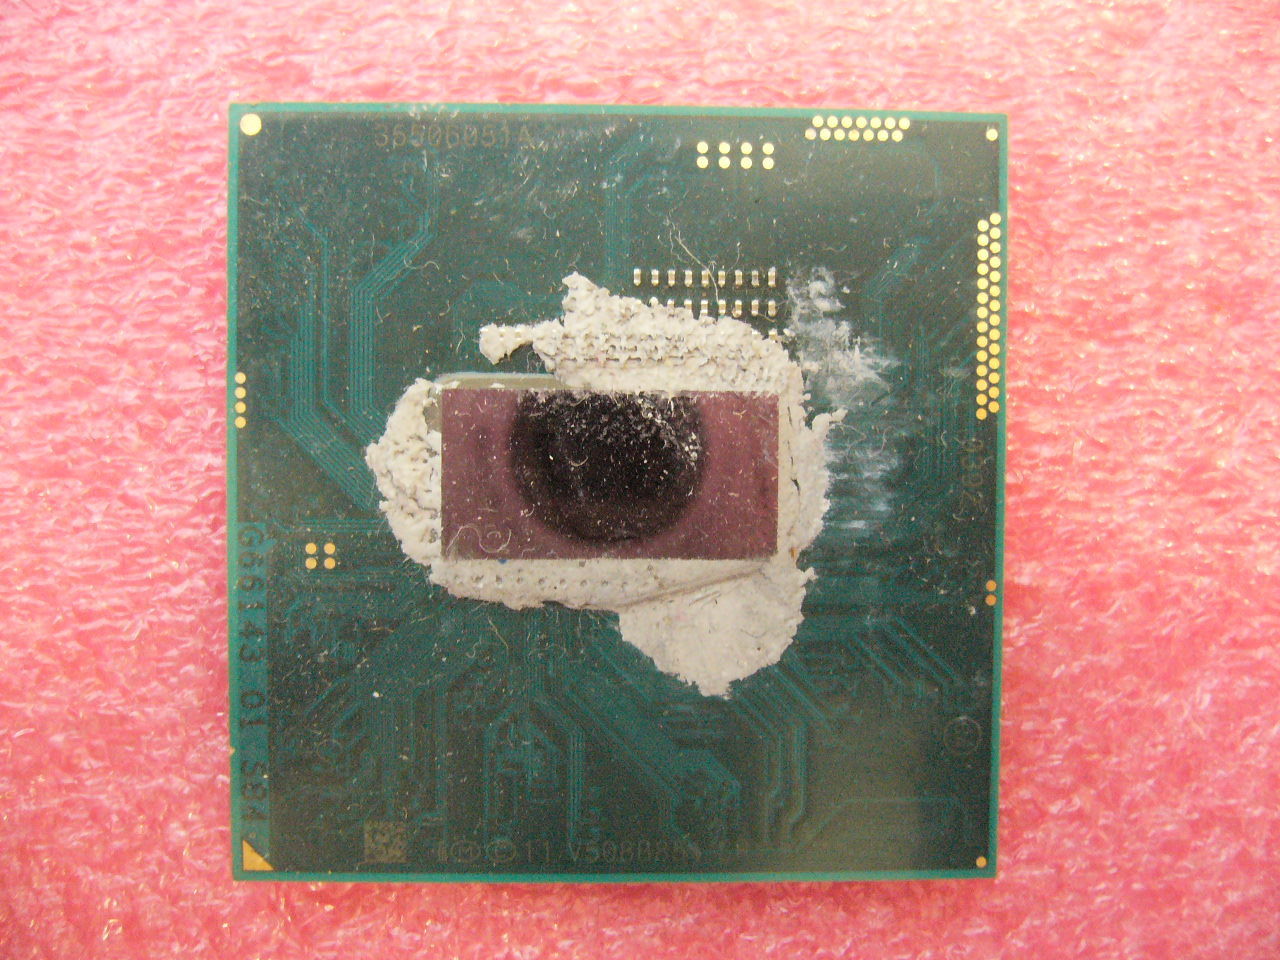 QTY 1x Intel CPU i7-4610M Dual-Core 3.0 Ghz rPGA946 SR1KY Socket G3 NOT WORKING - Click Image to Close